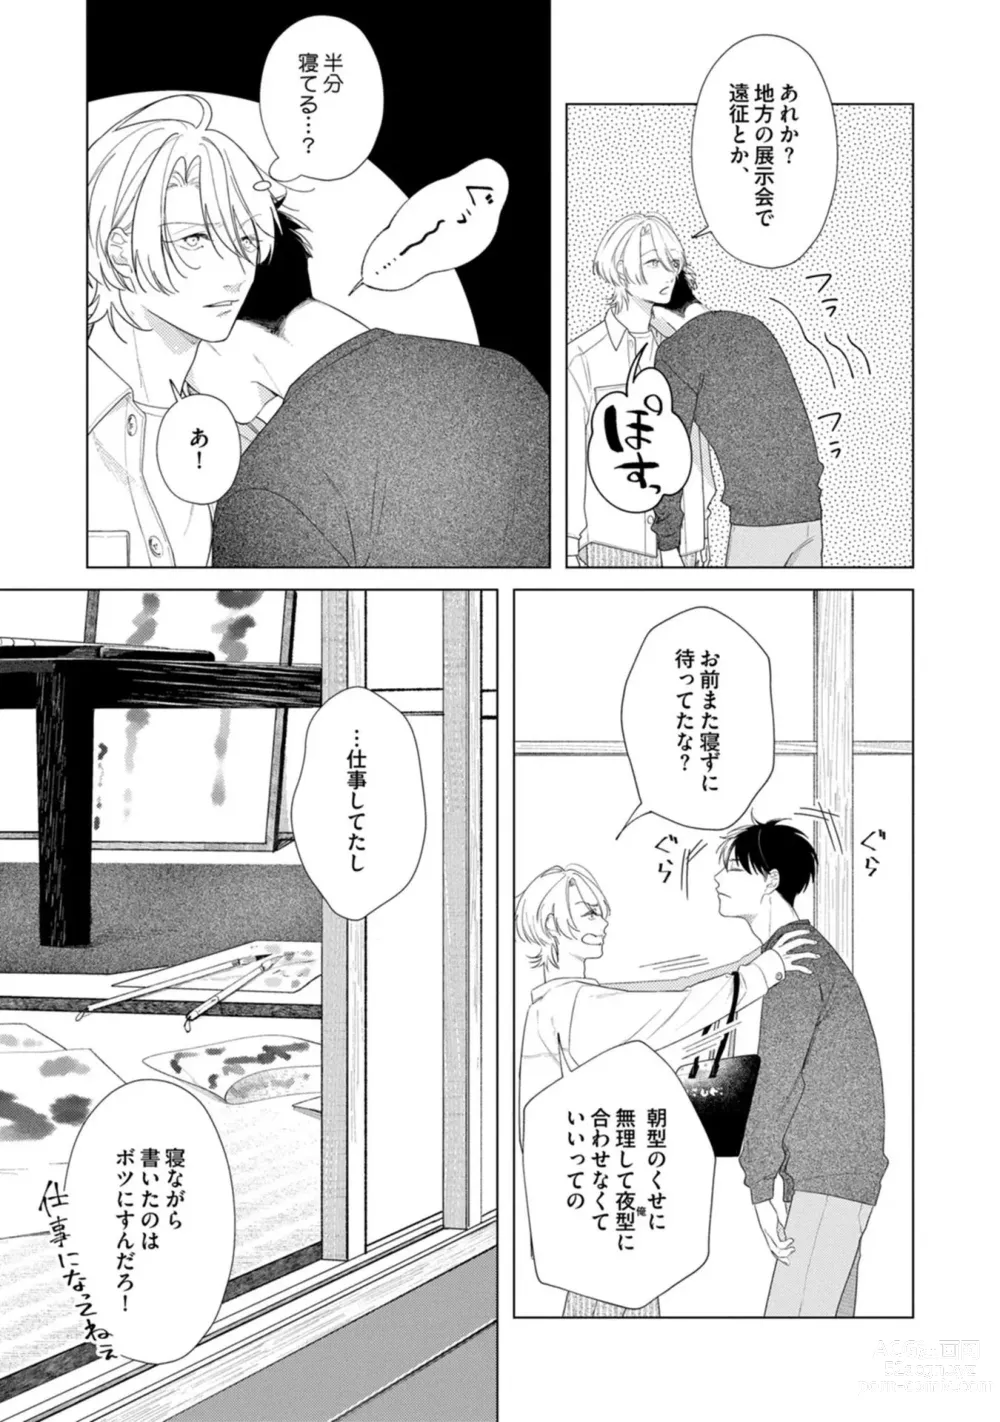 Page 7 of manga Yoru mo, Asa mo